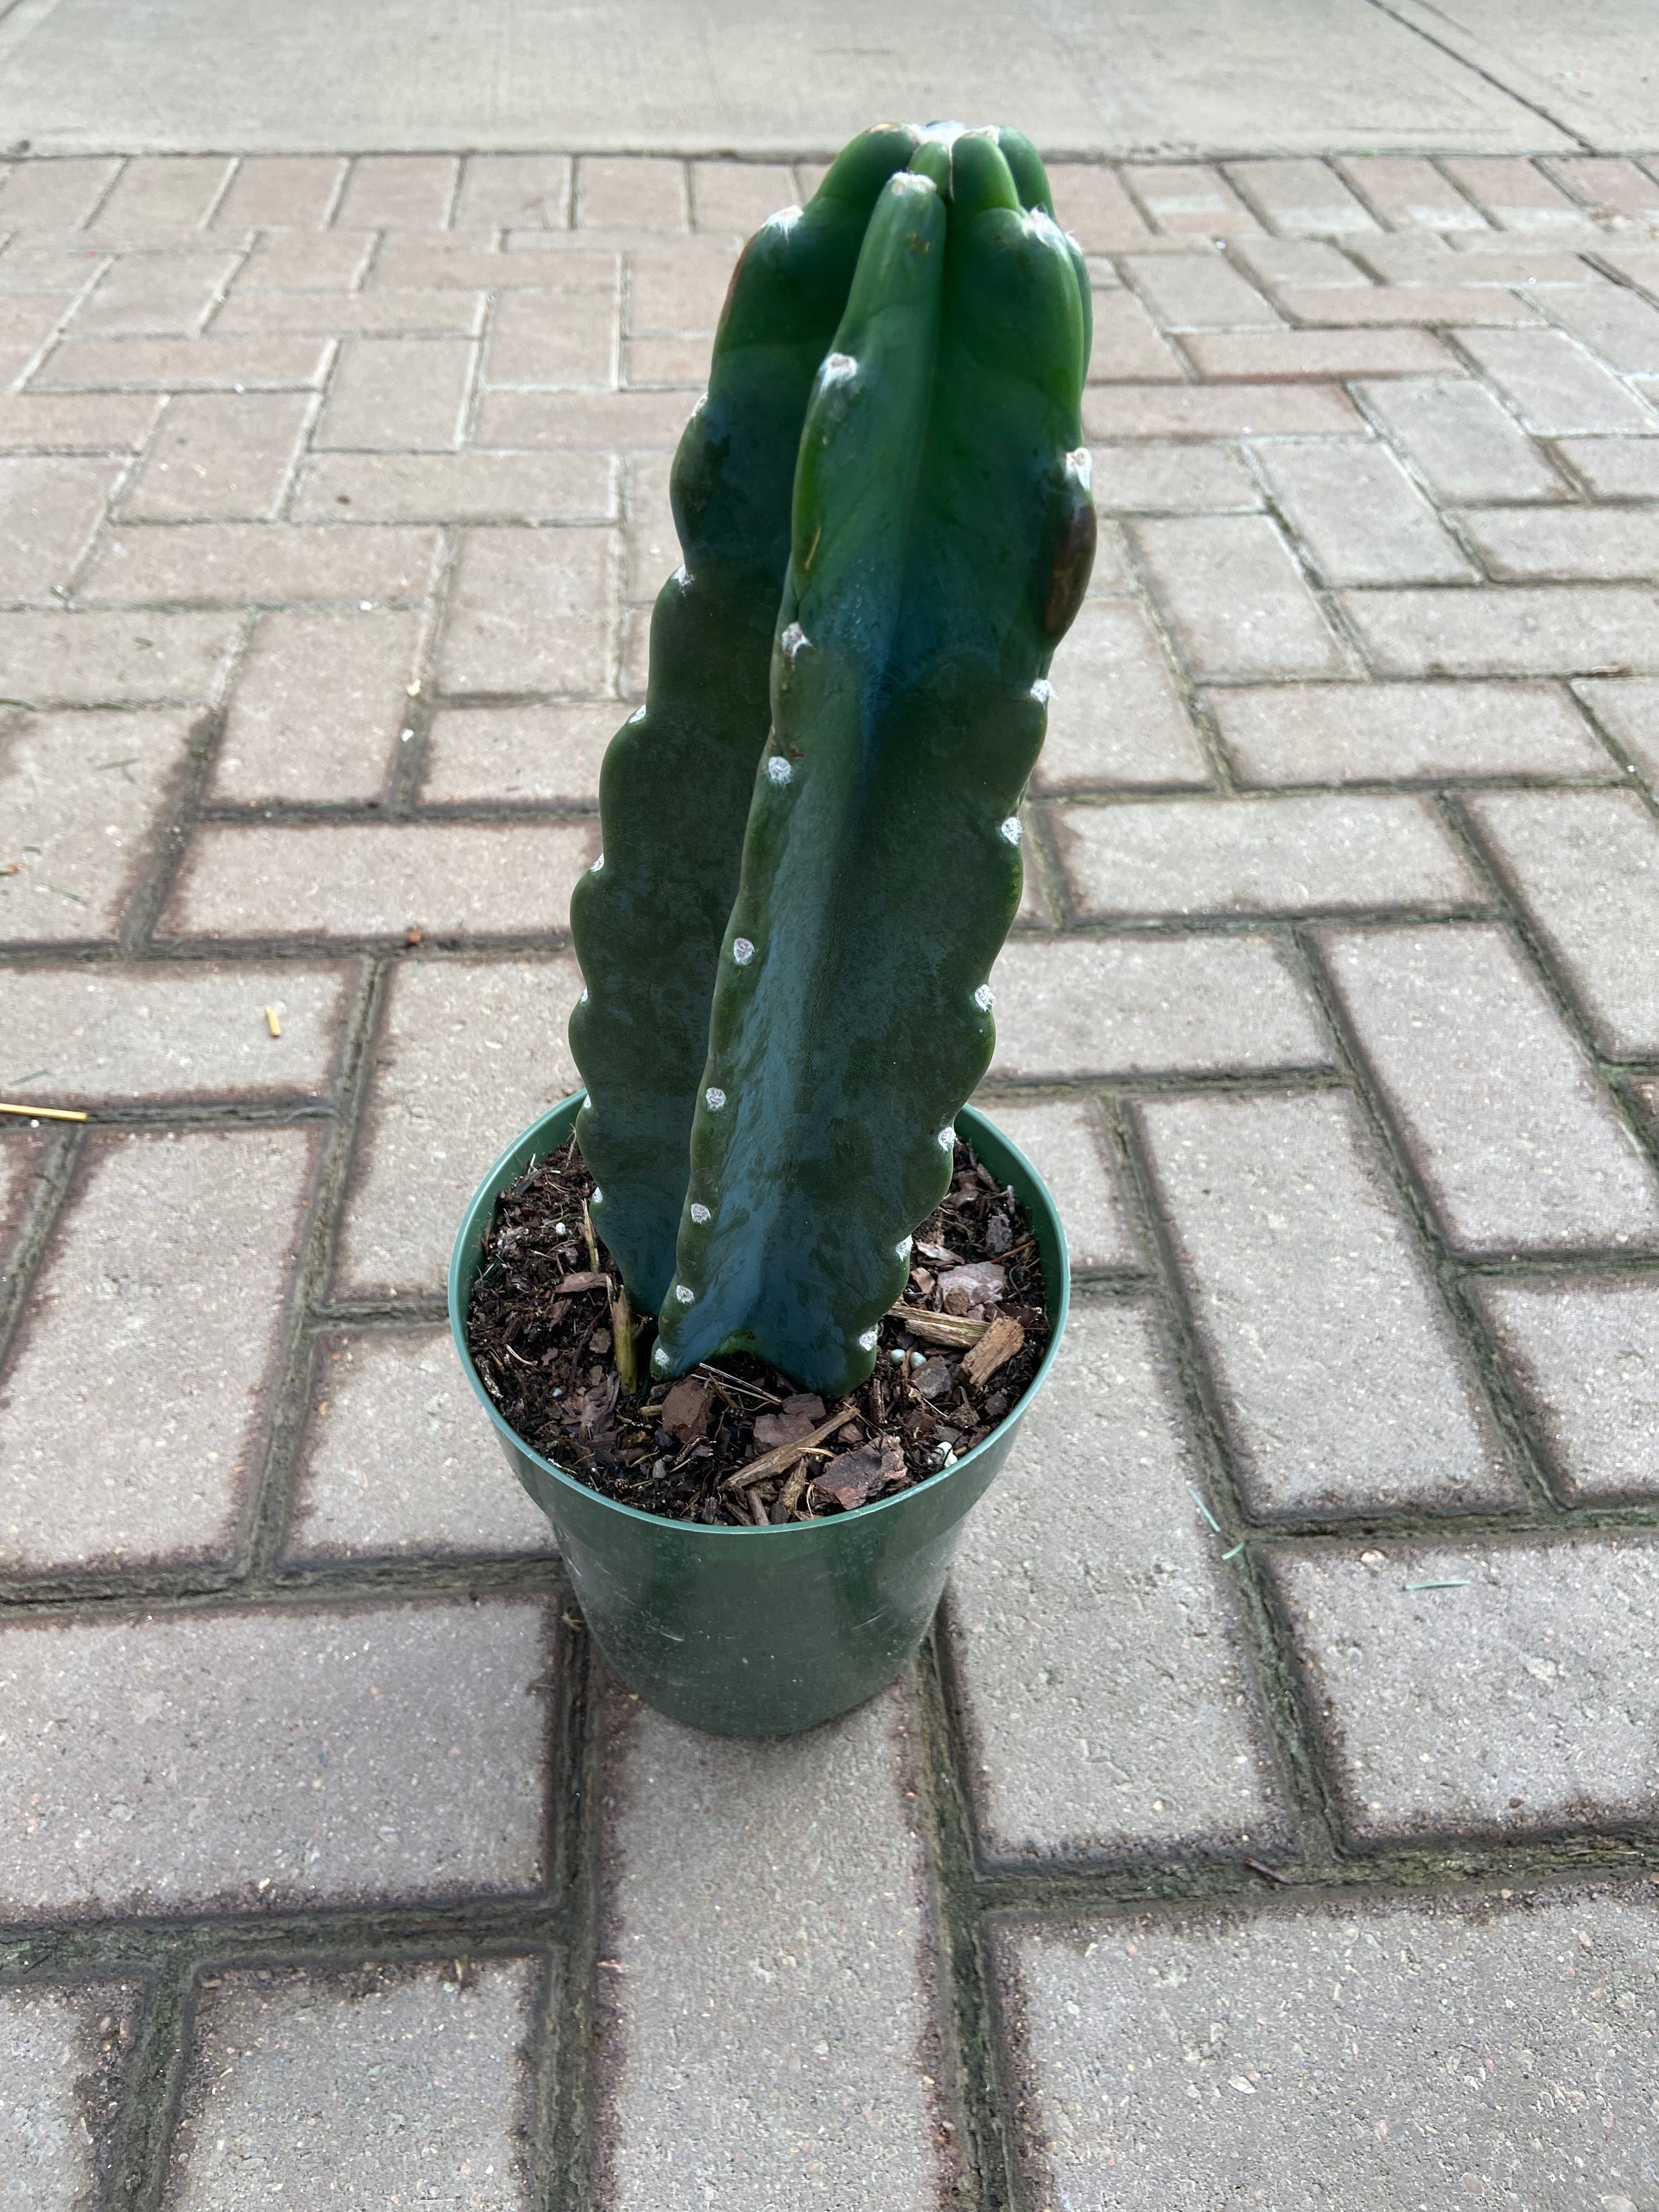 Cactus Jamacaru "Cuddly"